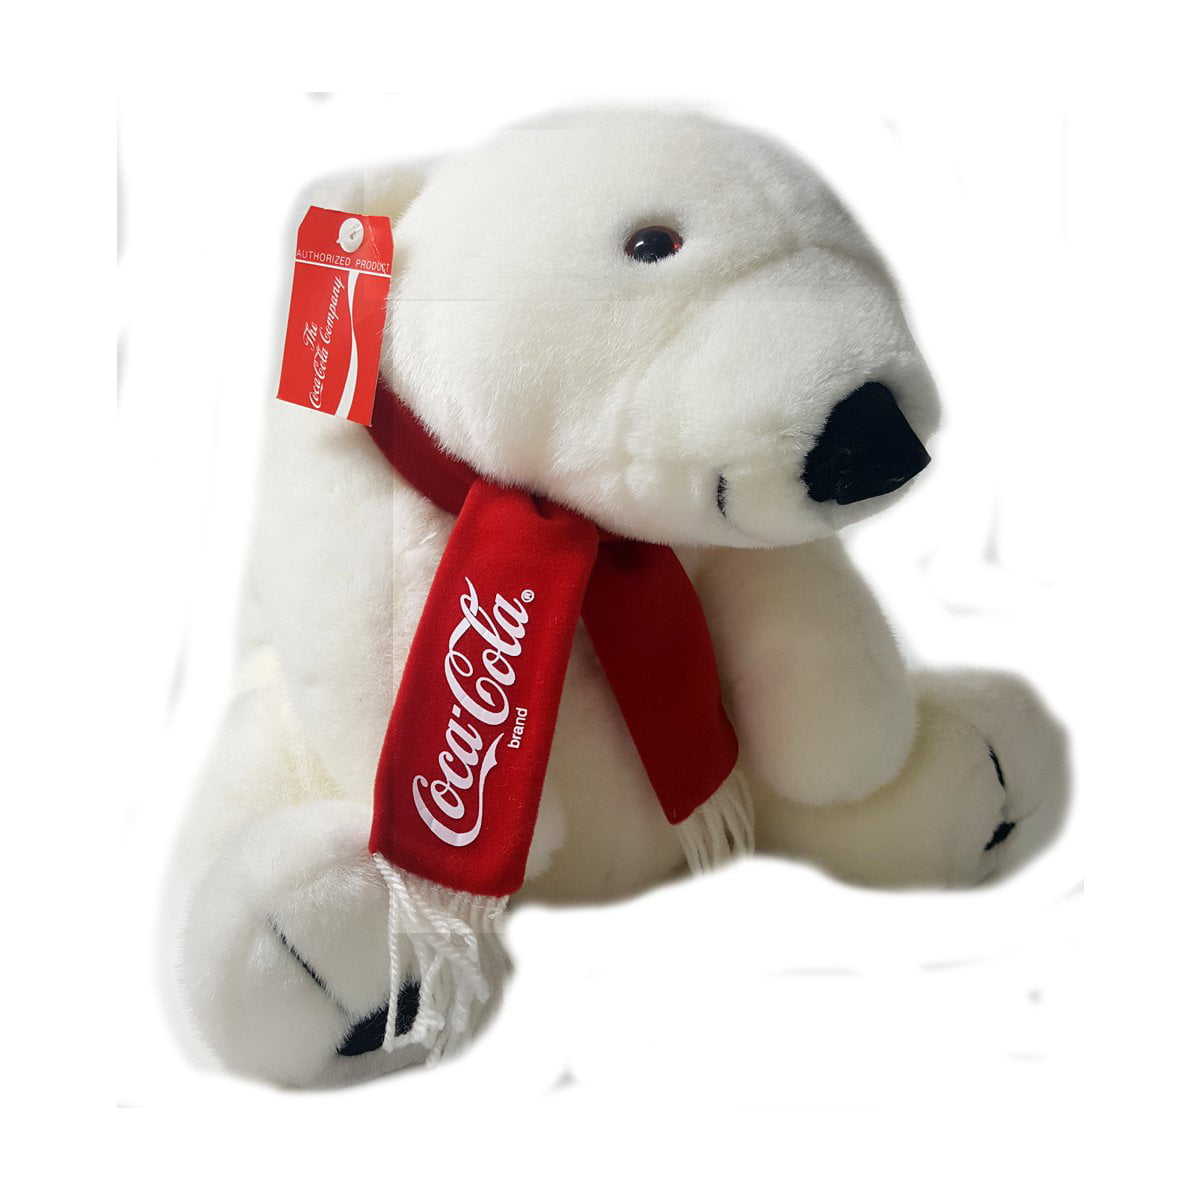 1993 coca cola plush bear